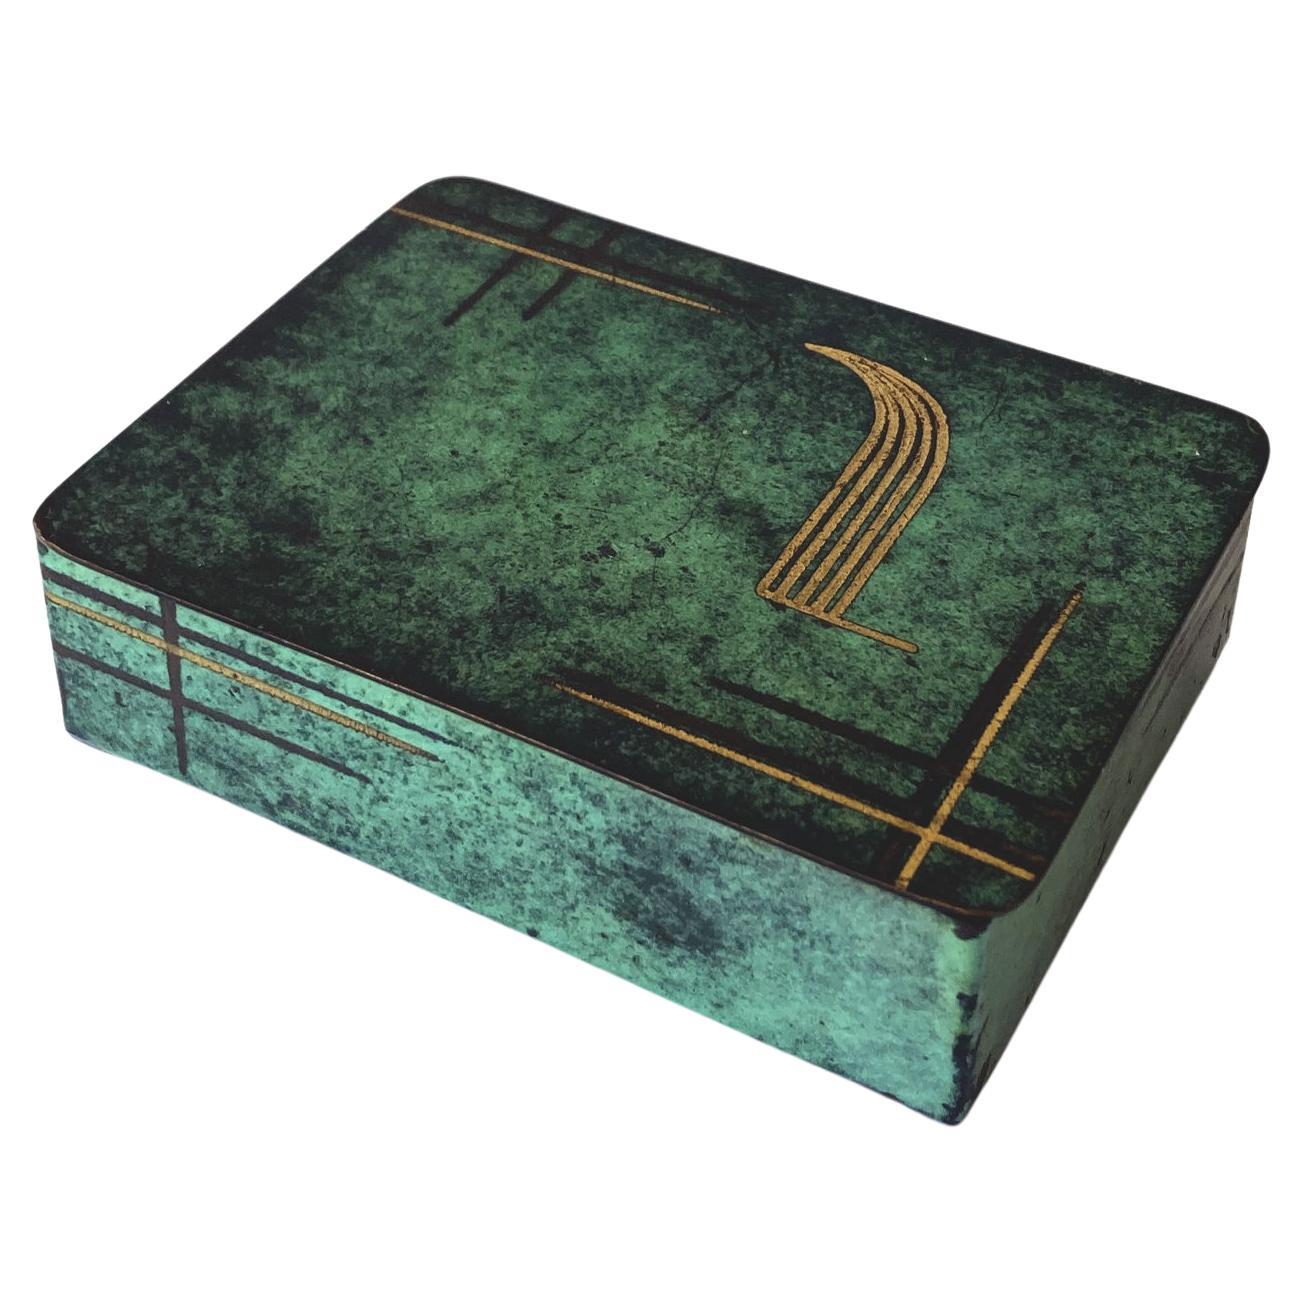 WMF Ikora Paul Haustein Green Patinated Metal Hinged Box, Wood Lined